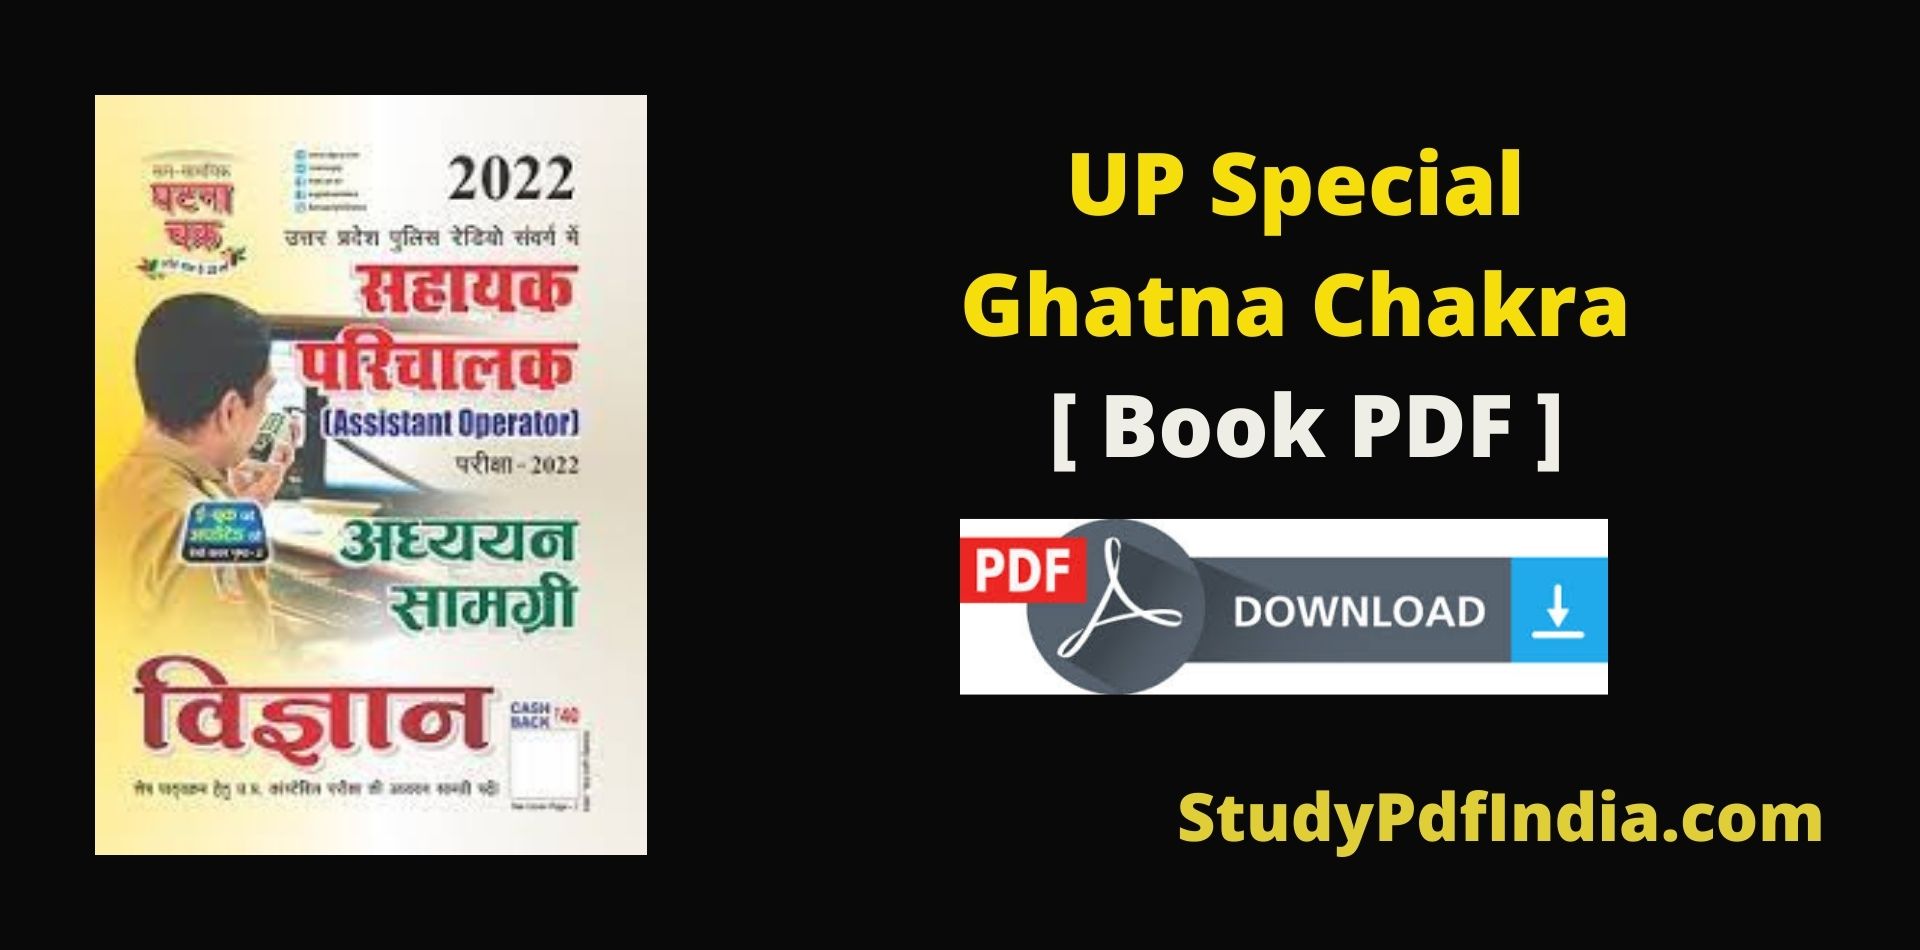 UP Special Ghatna Chakra Book PDF Download